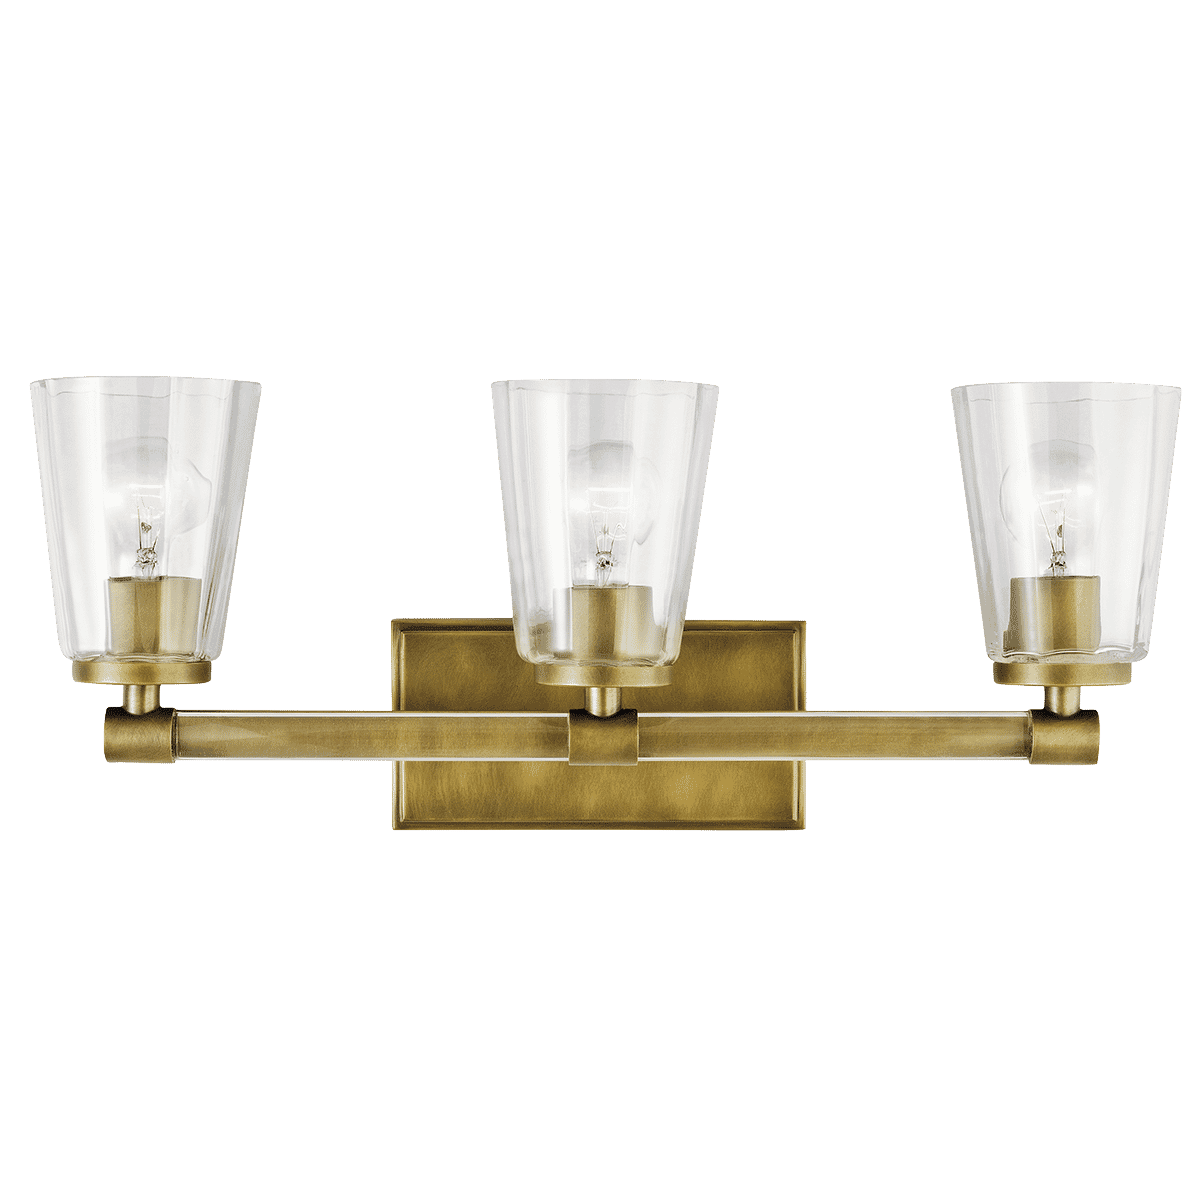 Kichler Audrea Bathroom Vanity Light 3-Light in Natural Brass | eBay